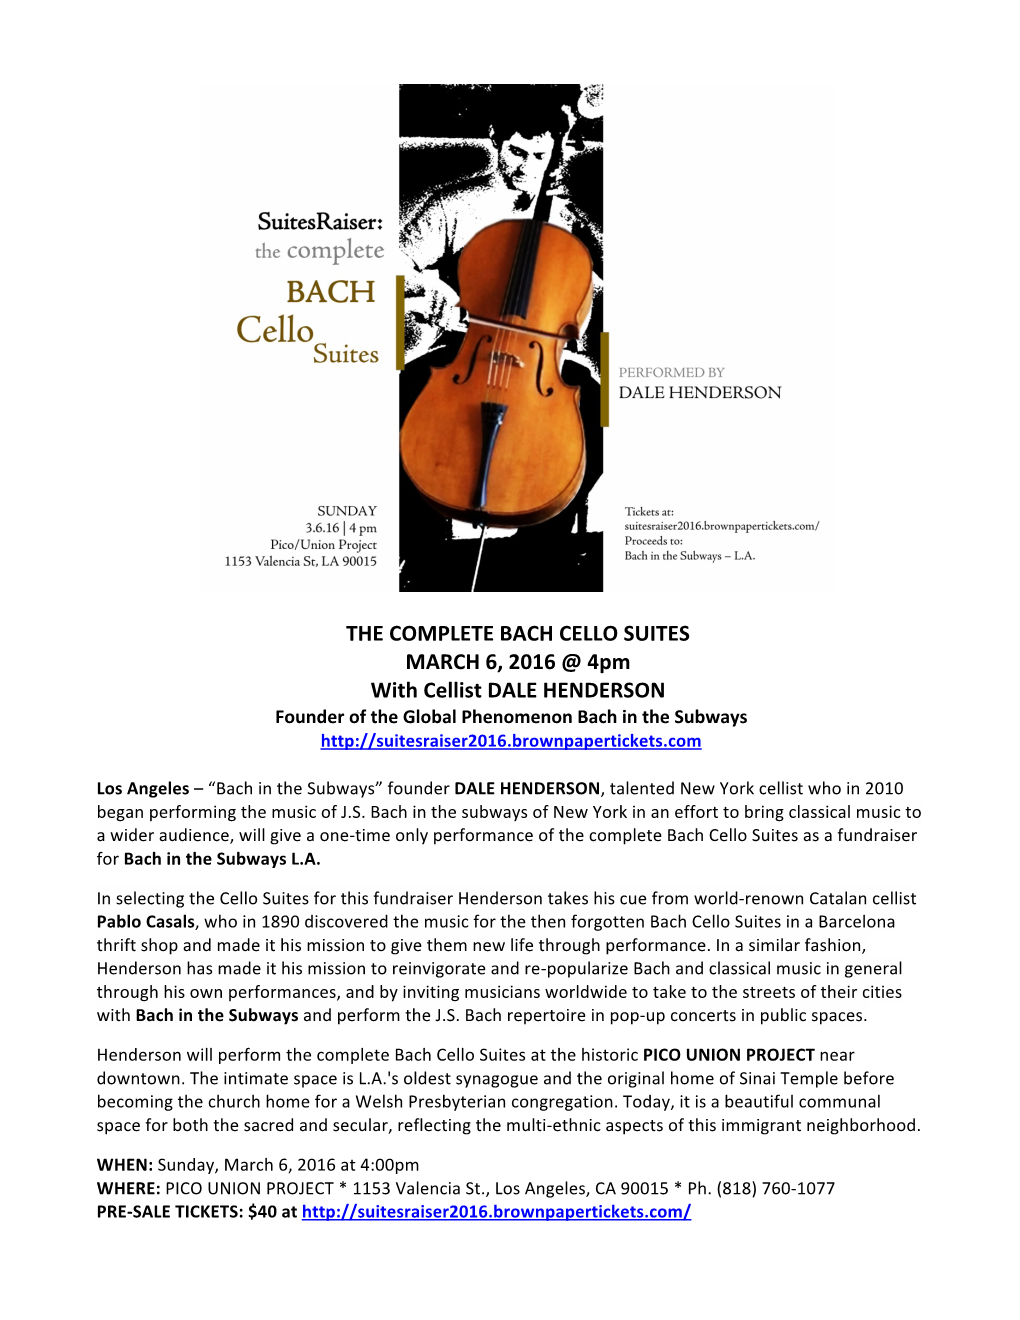 The Complete Bach Cello Suites